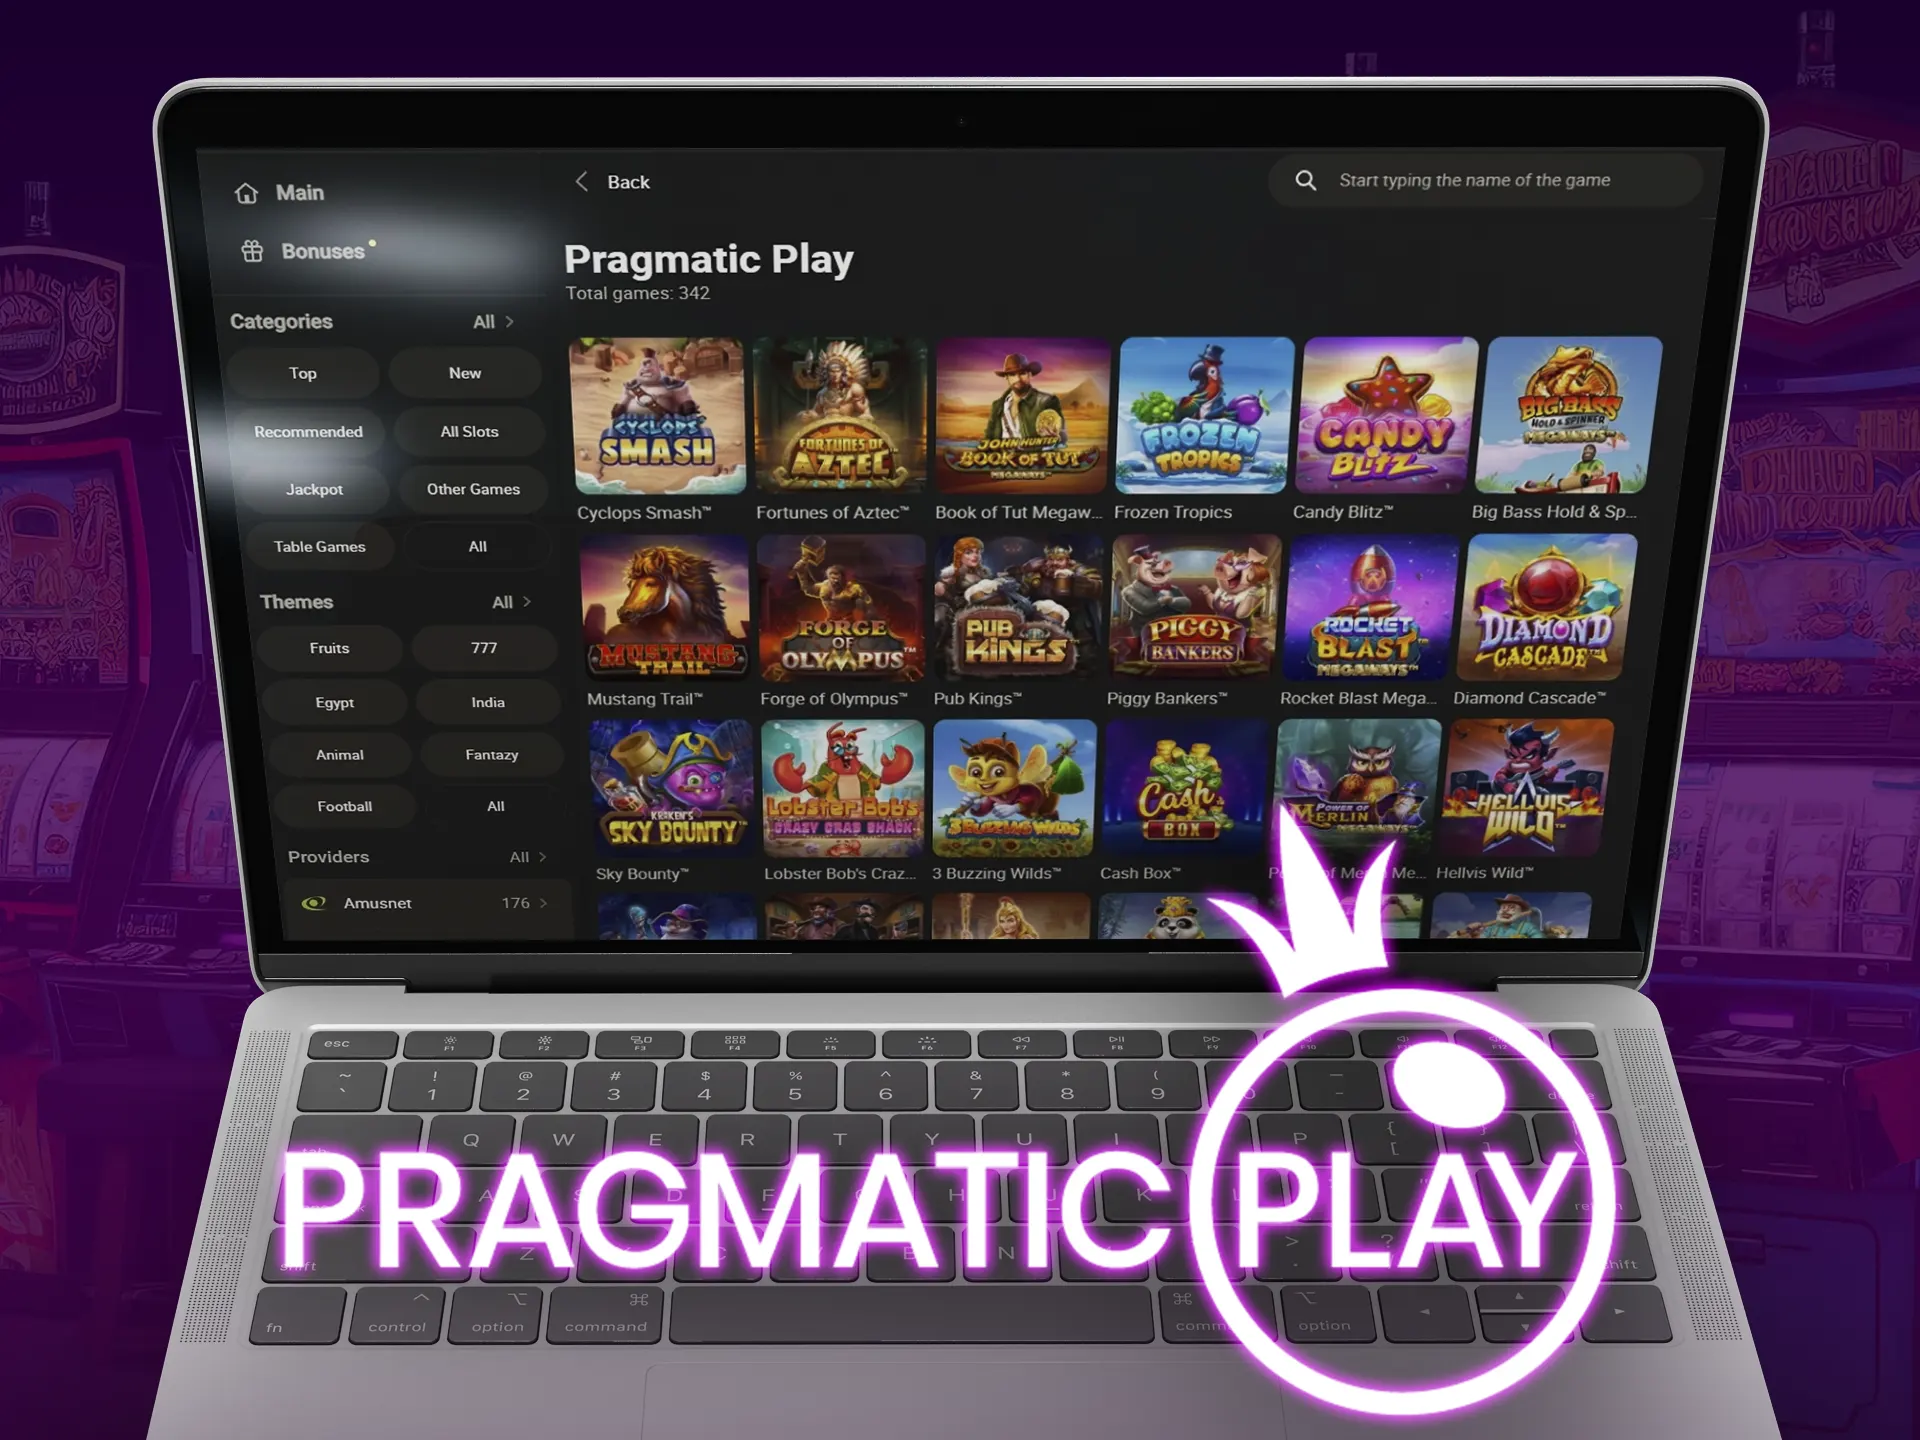 Pragmatic Play is a popular slots games provider.